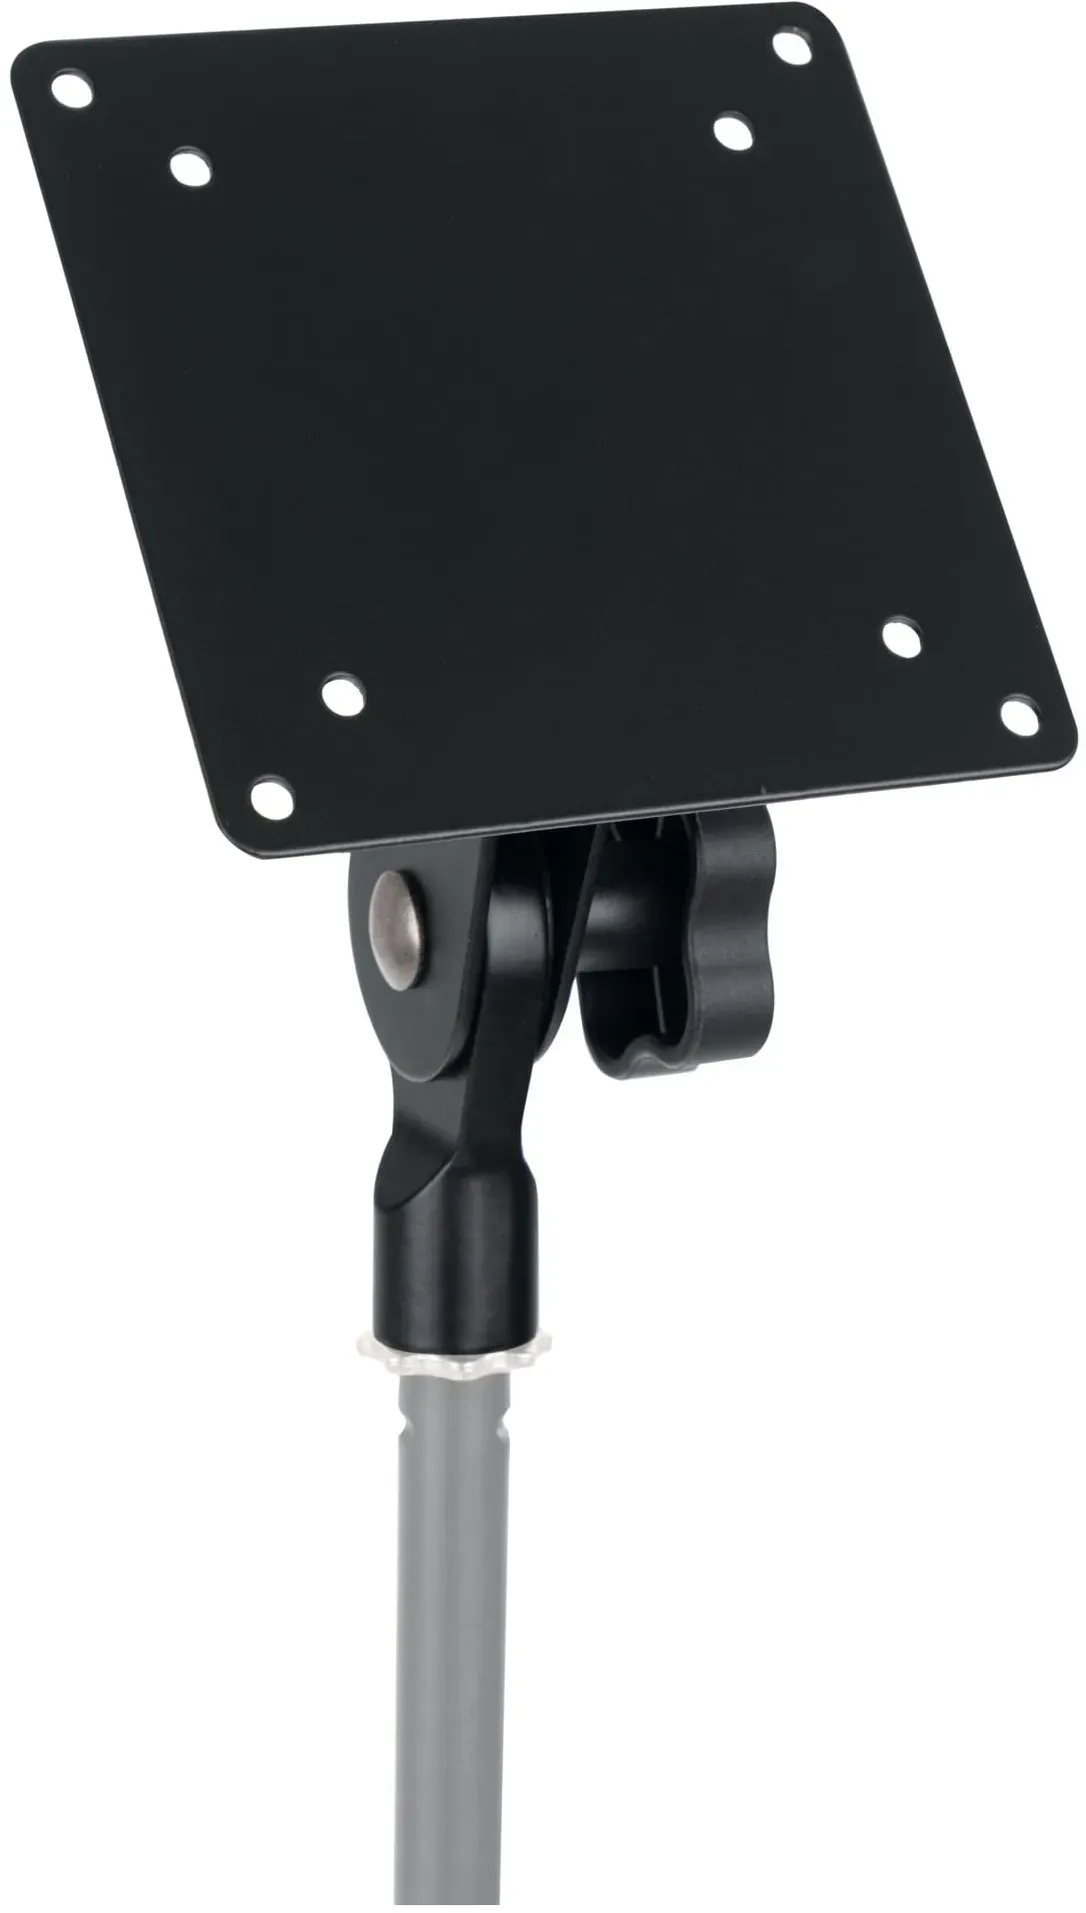 Pronomic Mikrofonstativ-Adapter mit VESA-Mount für LED/TFT Displays